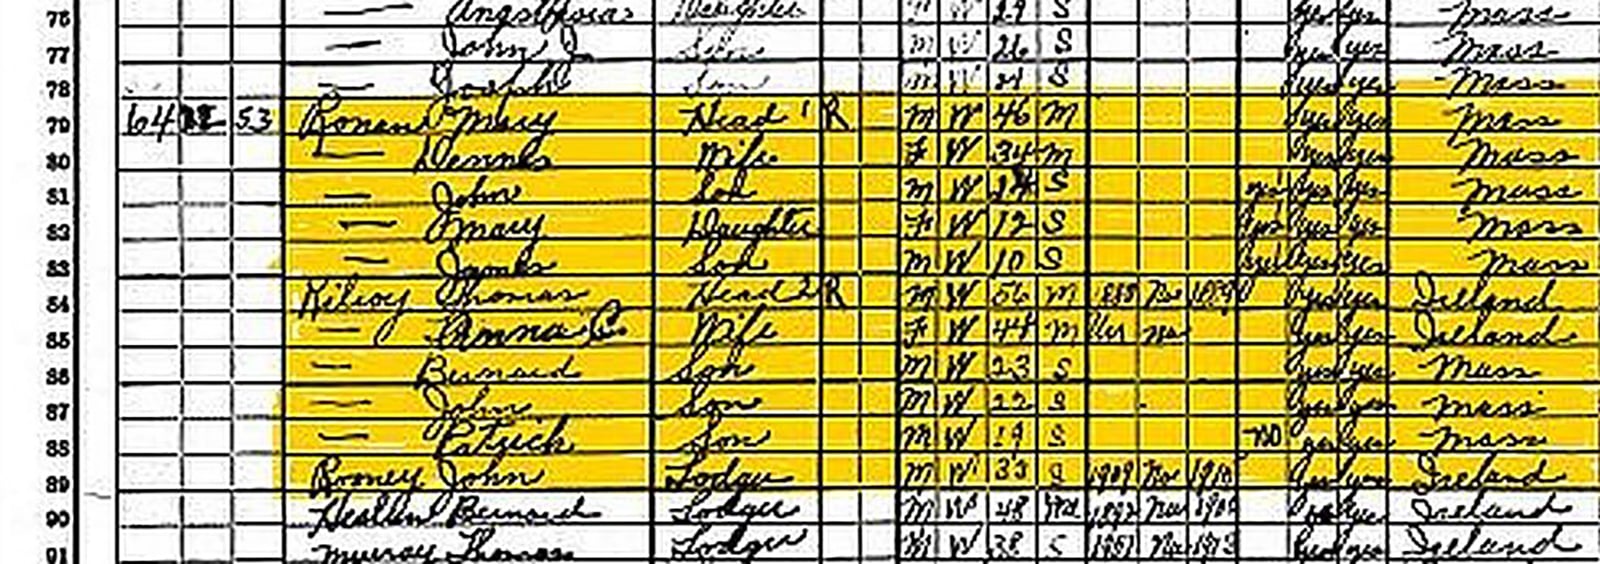 1920-census-ronan-family